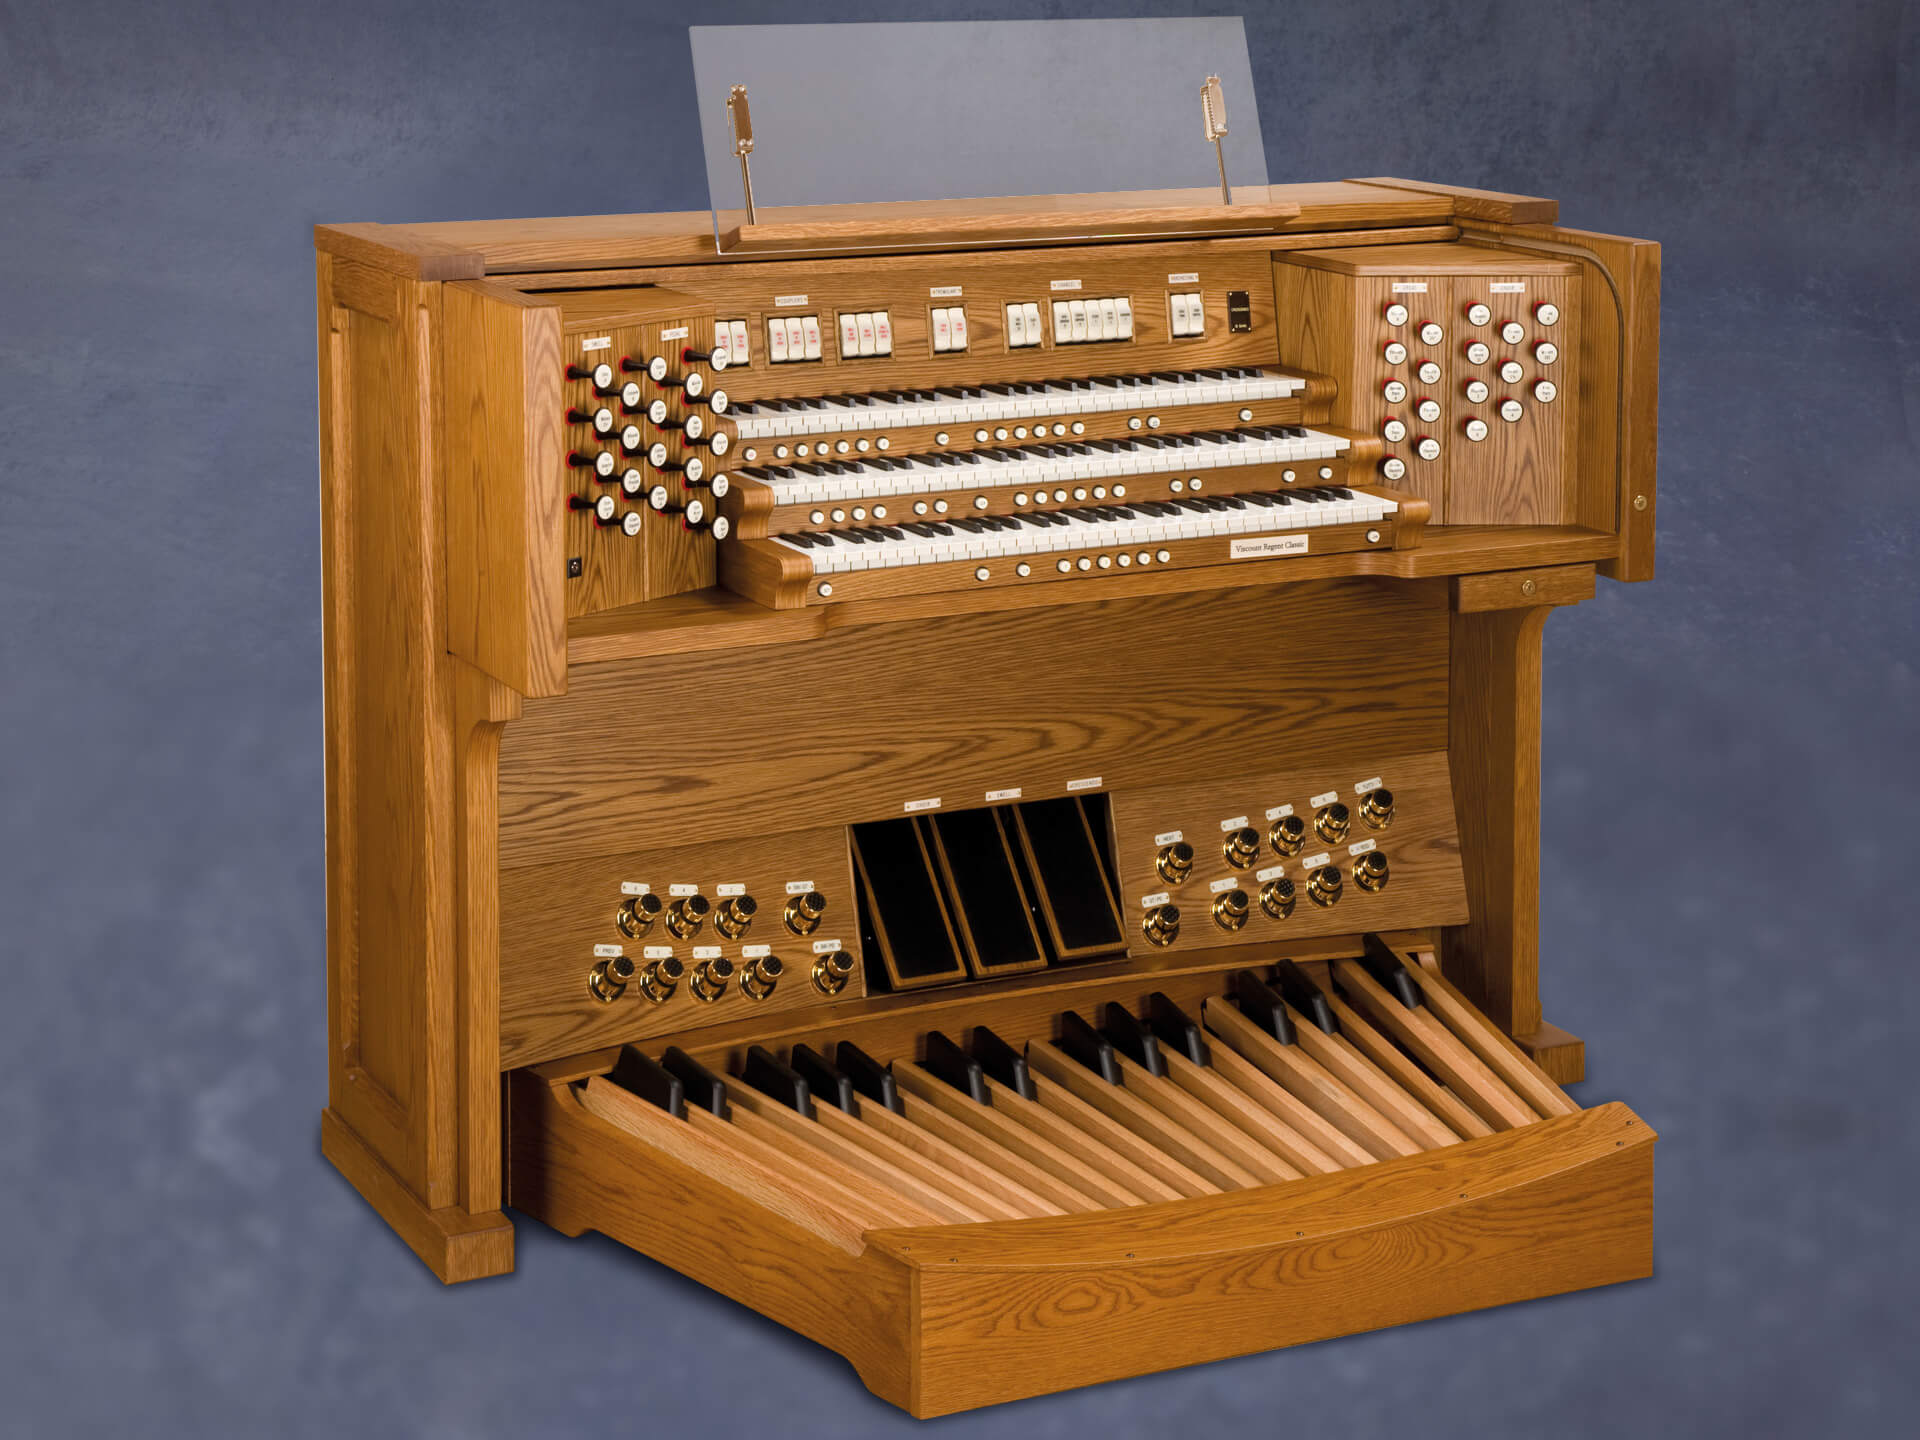 13 Regent Classic Organ – St Marys Luddenden